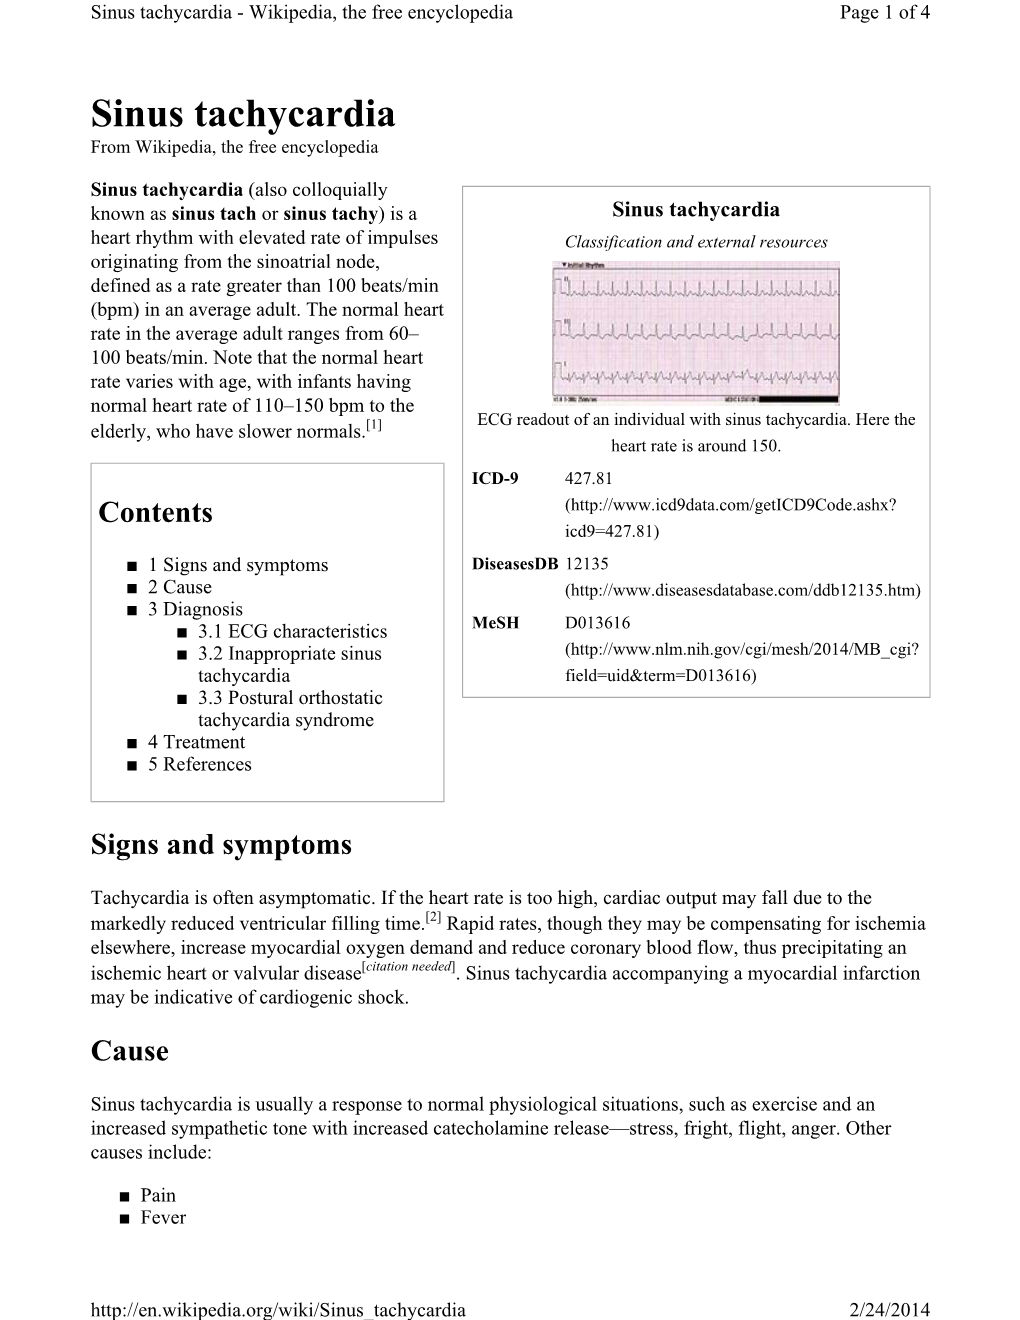 Sinus Tachycardia - Wikipedia, the Free Encyclopedia Page 1 of 4